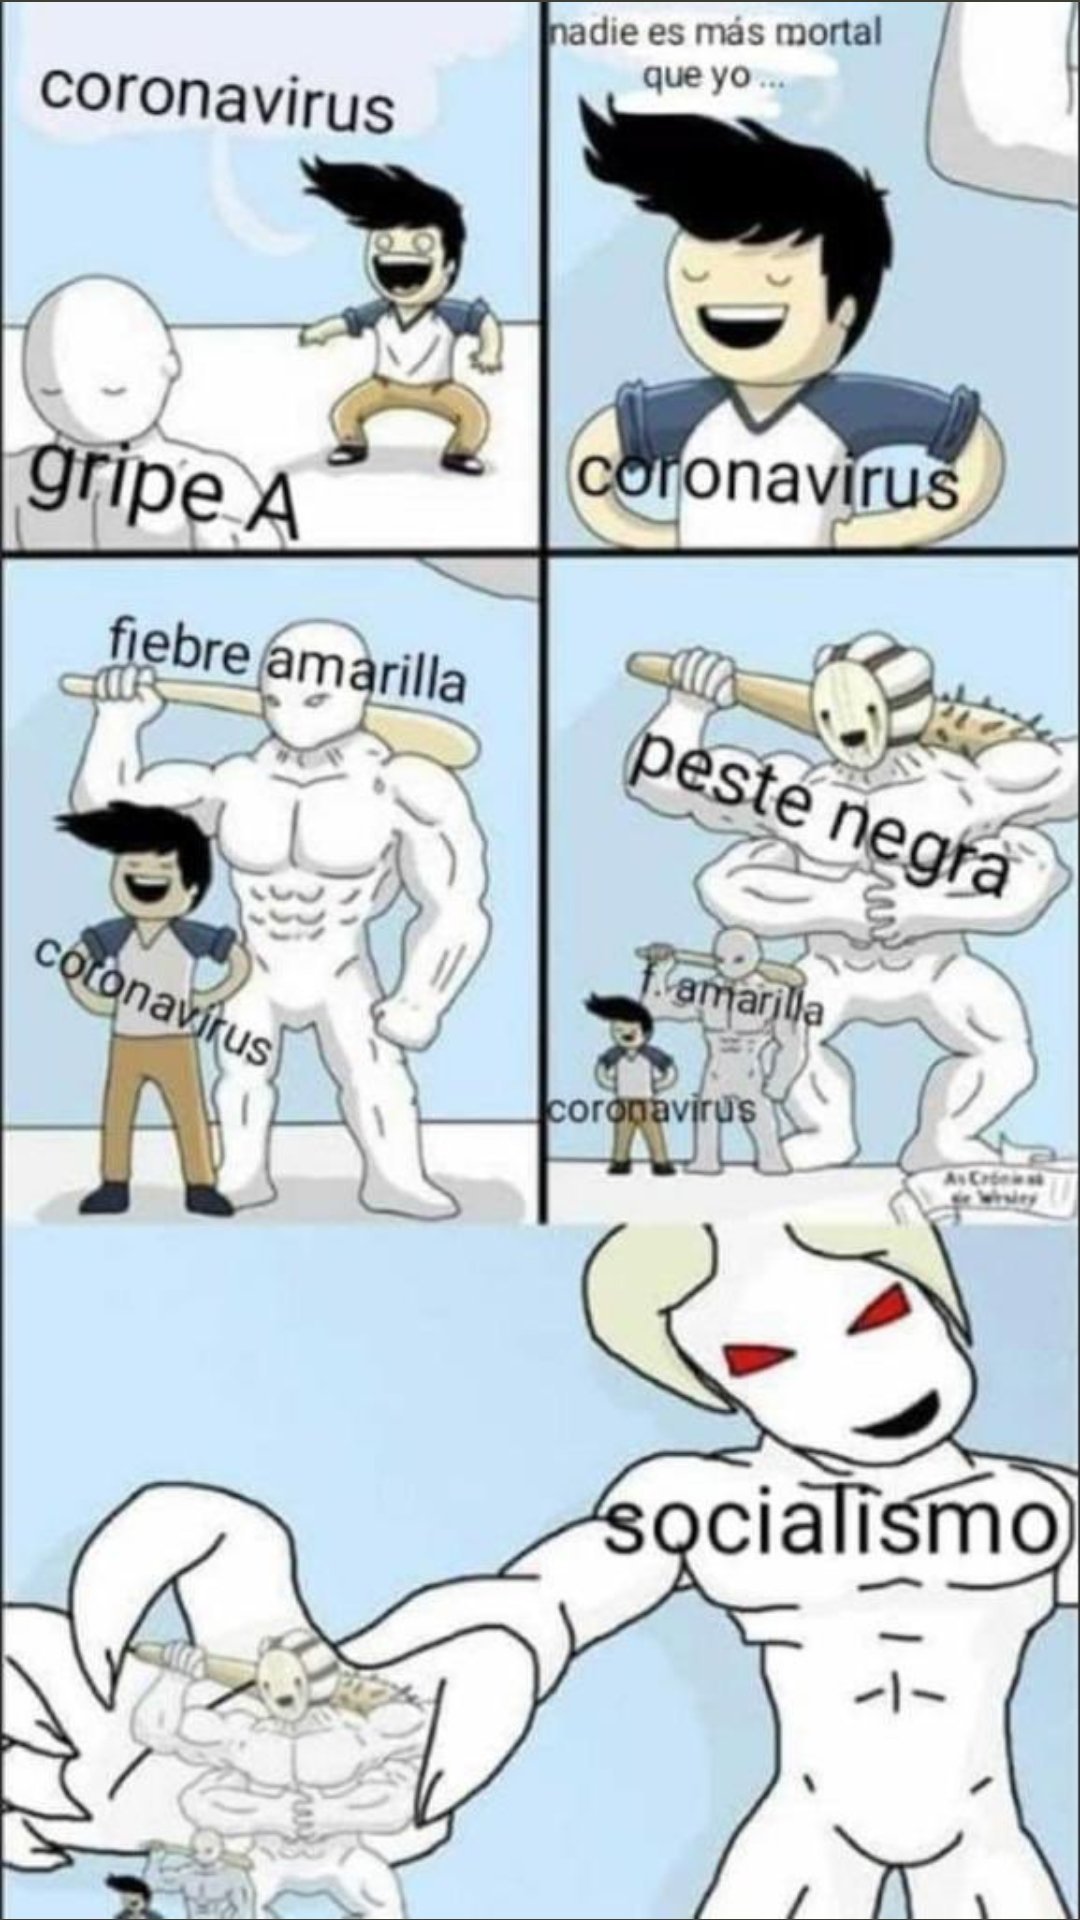 Corona Virus VS Socialismo - meme